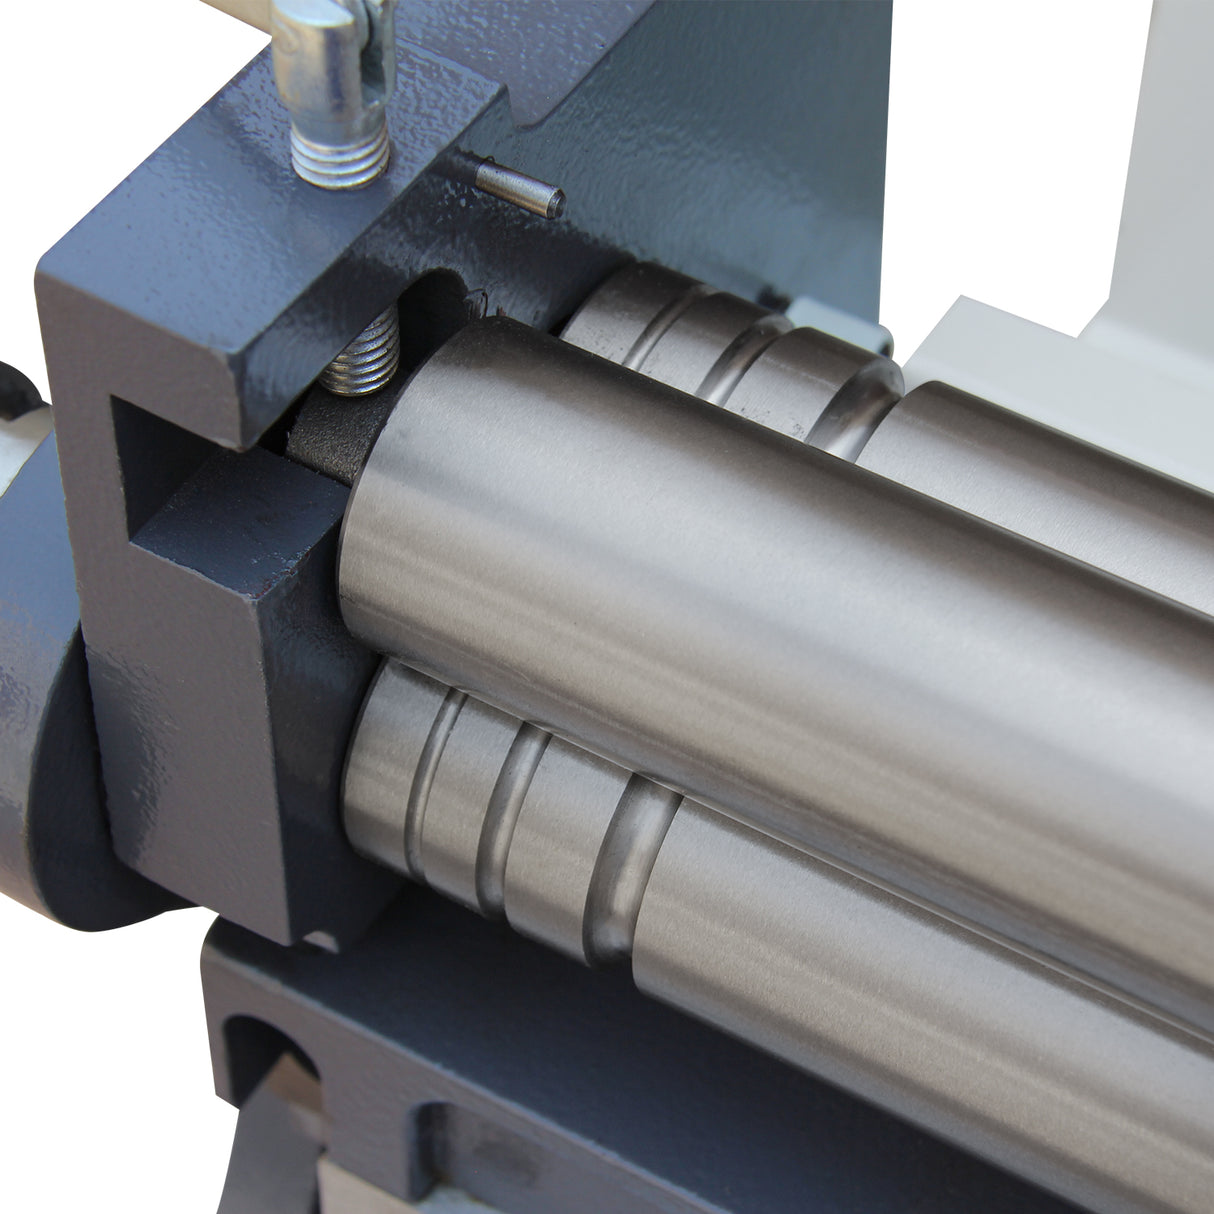 KANG Industrial 3-In-1/12, 305mm Combination Sheet Metal Brake, Shear Press Brake 1.0mm Capacity